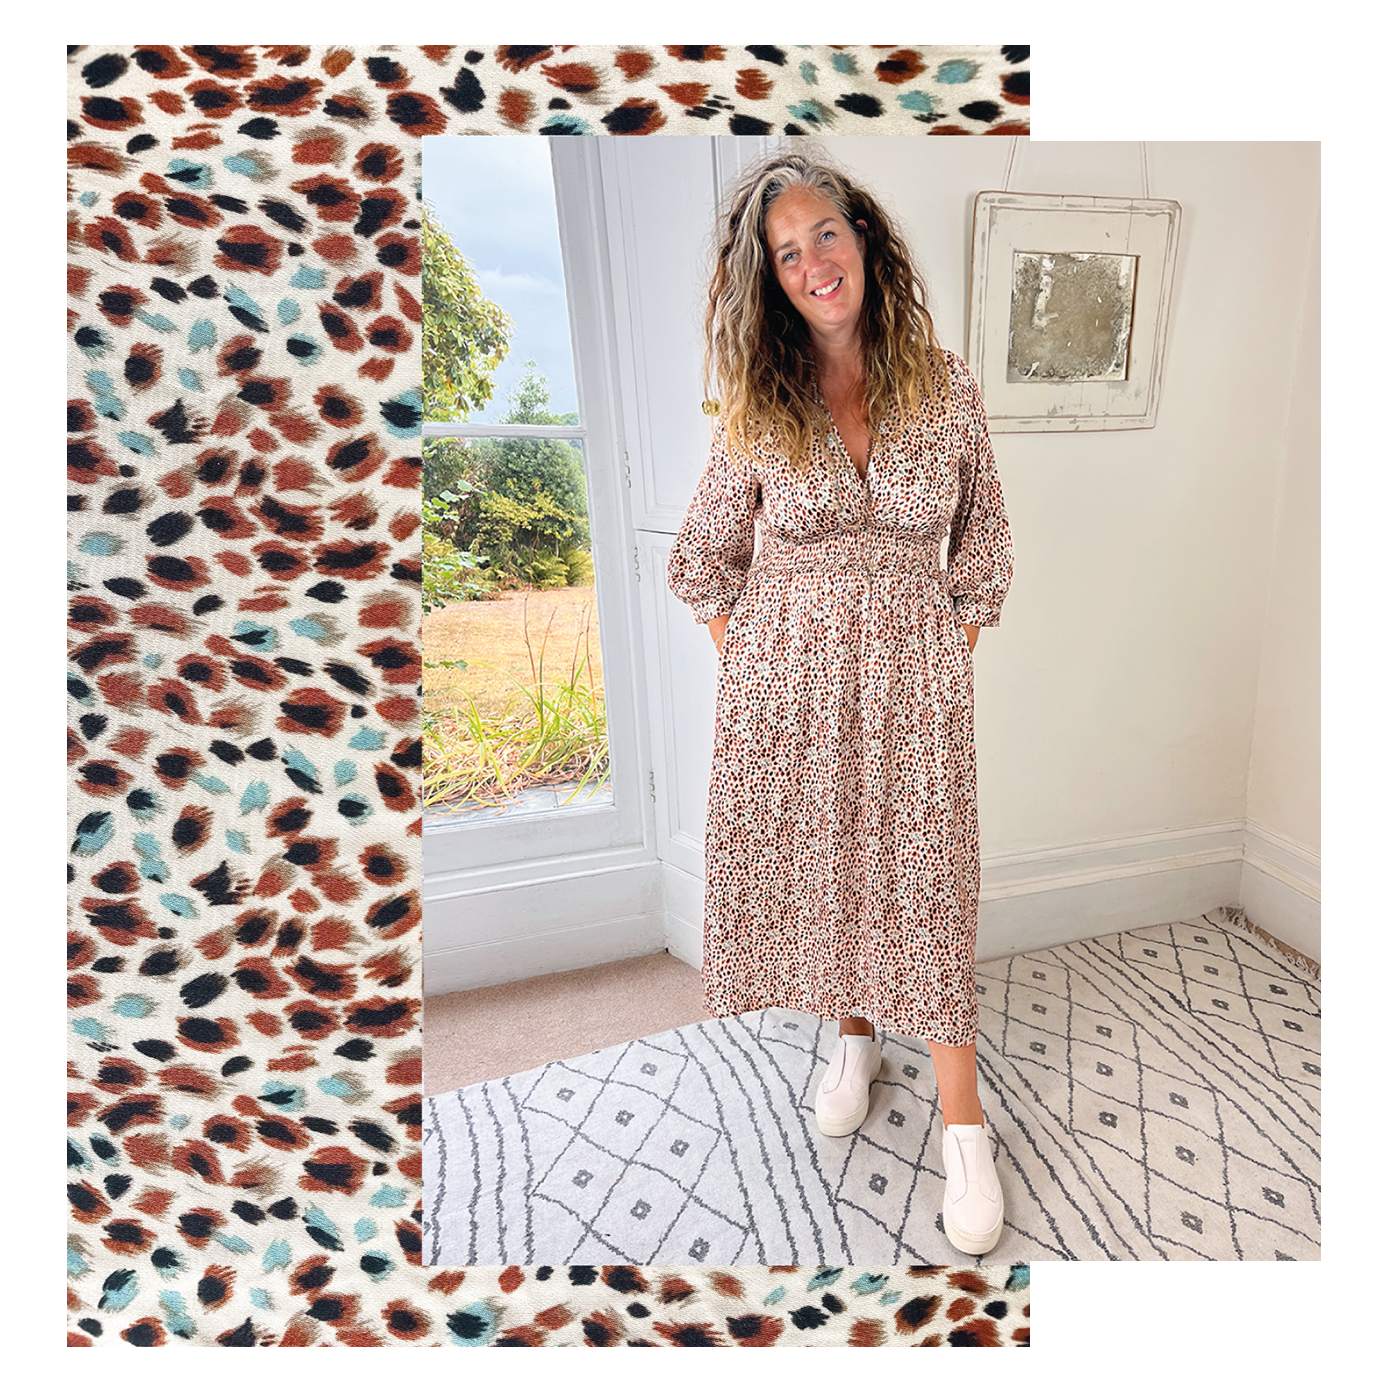 Emma wearing a leopard print dress